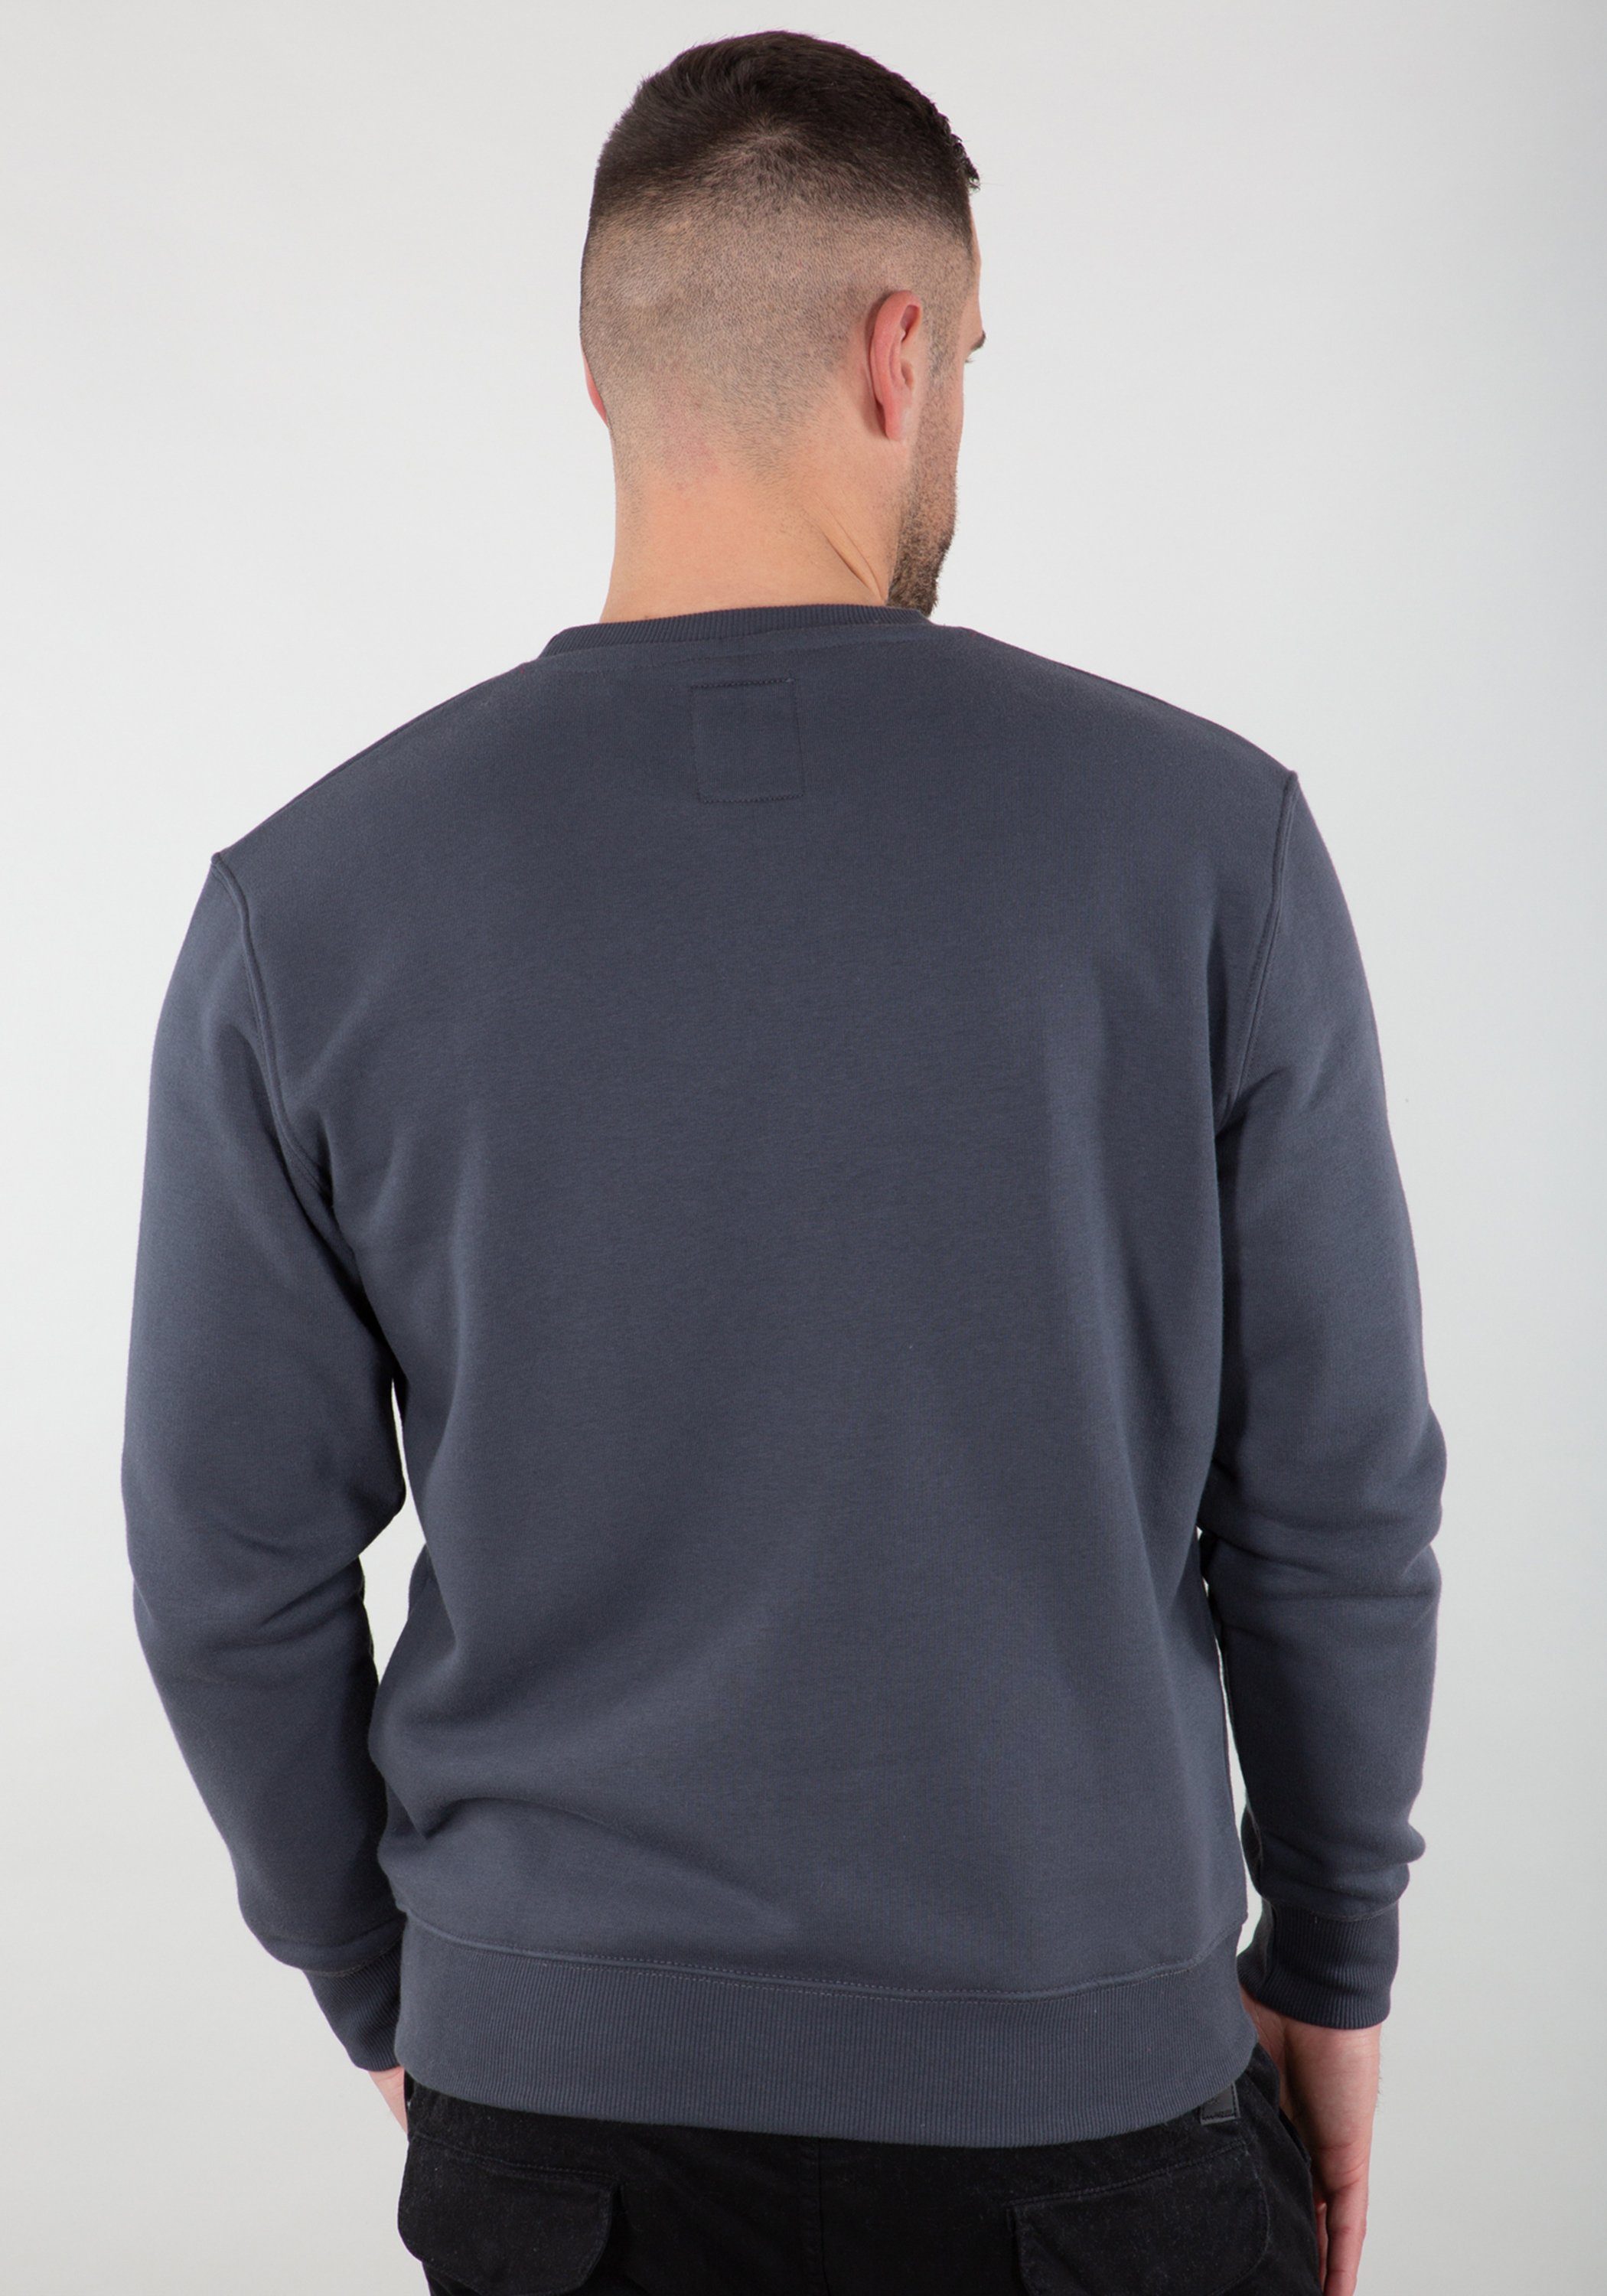 greyblack/black Sweater Basic Alpha Sweater Sweatshirts Men Alpha Industries - Industries